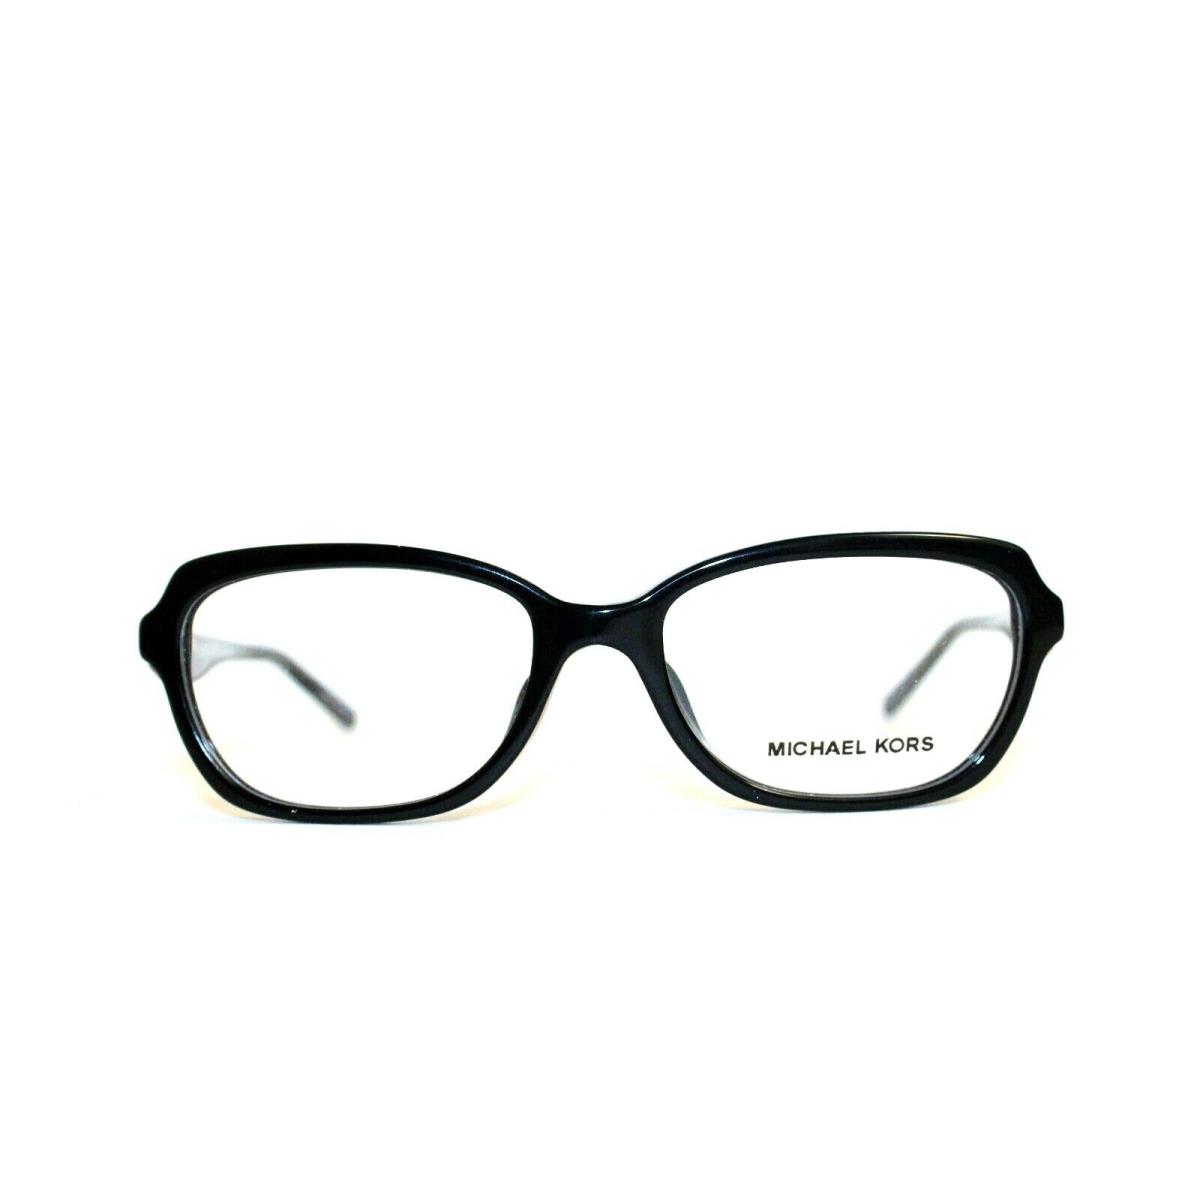 Michael Kors MK 4025 3005 Sadie IV Black Eyeglasses RX 49-16-135 Women